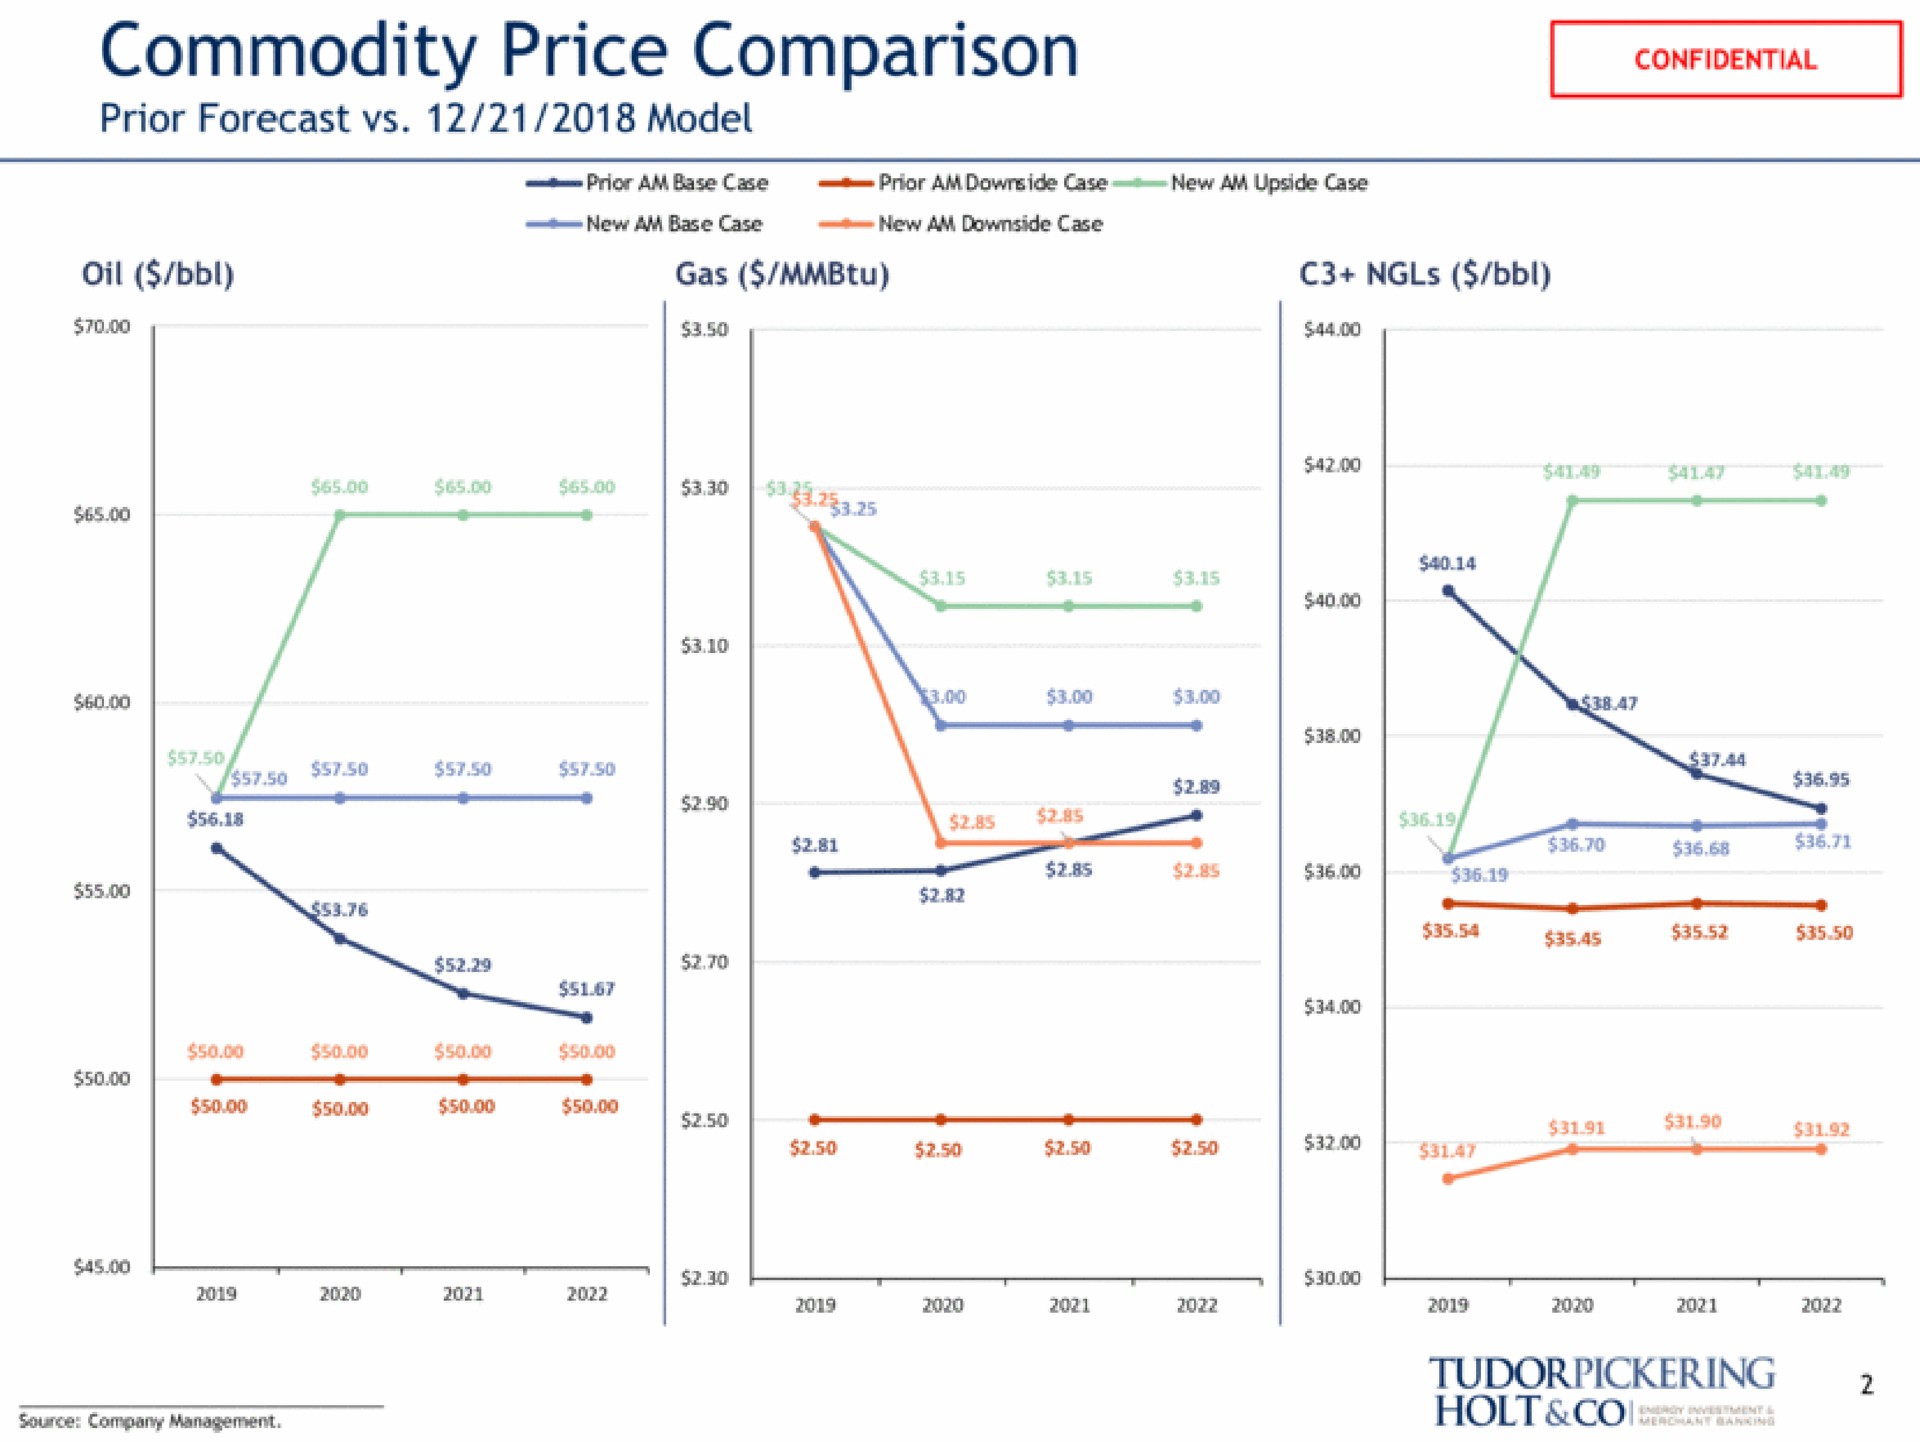 oil gas prior forecast model commodity price comparison management holt | Tudor, Pickering, Holt & Co